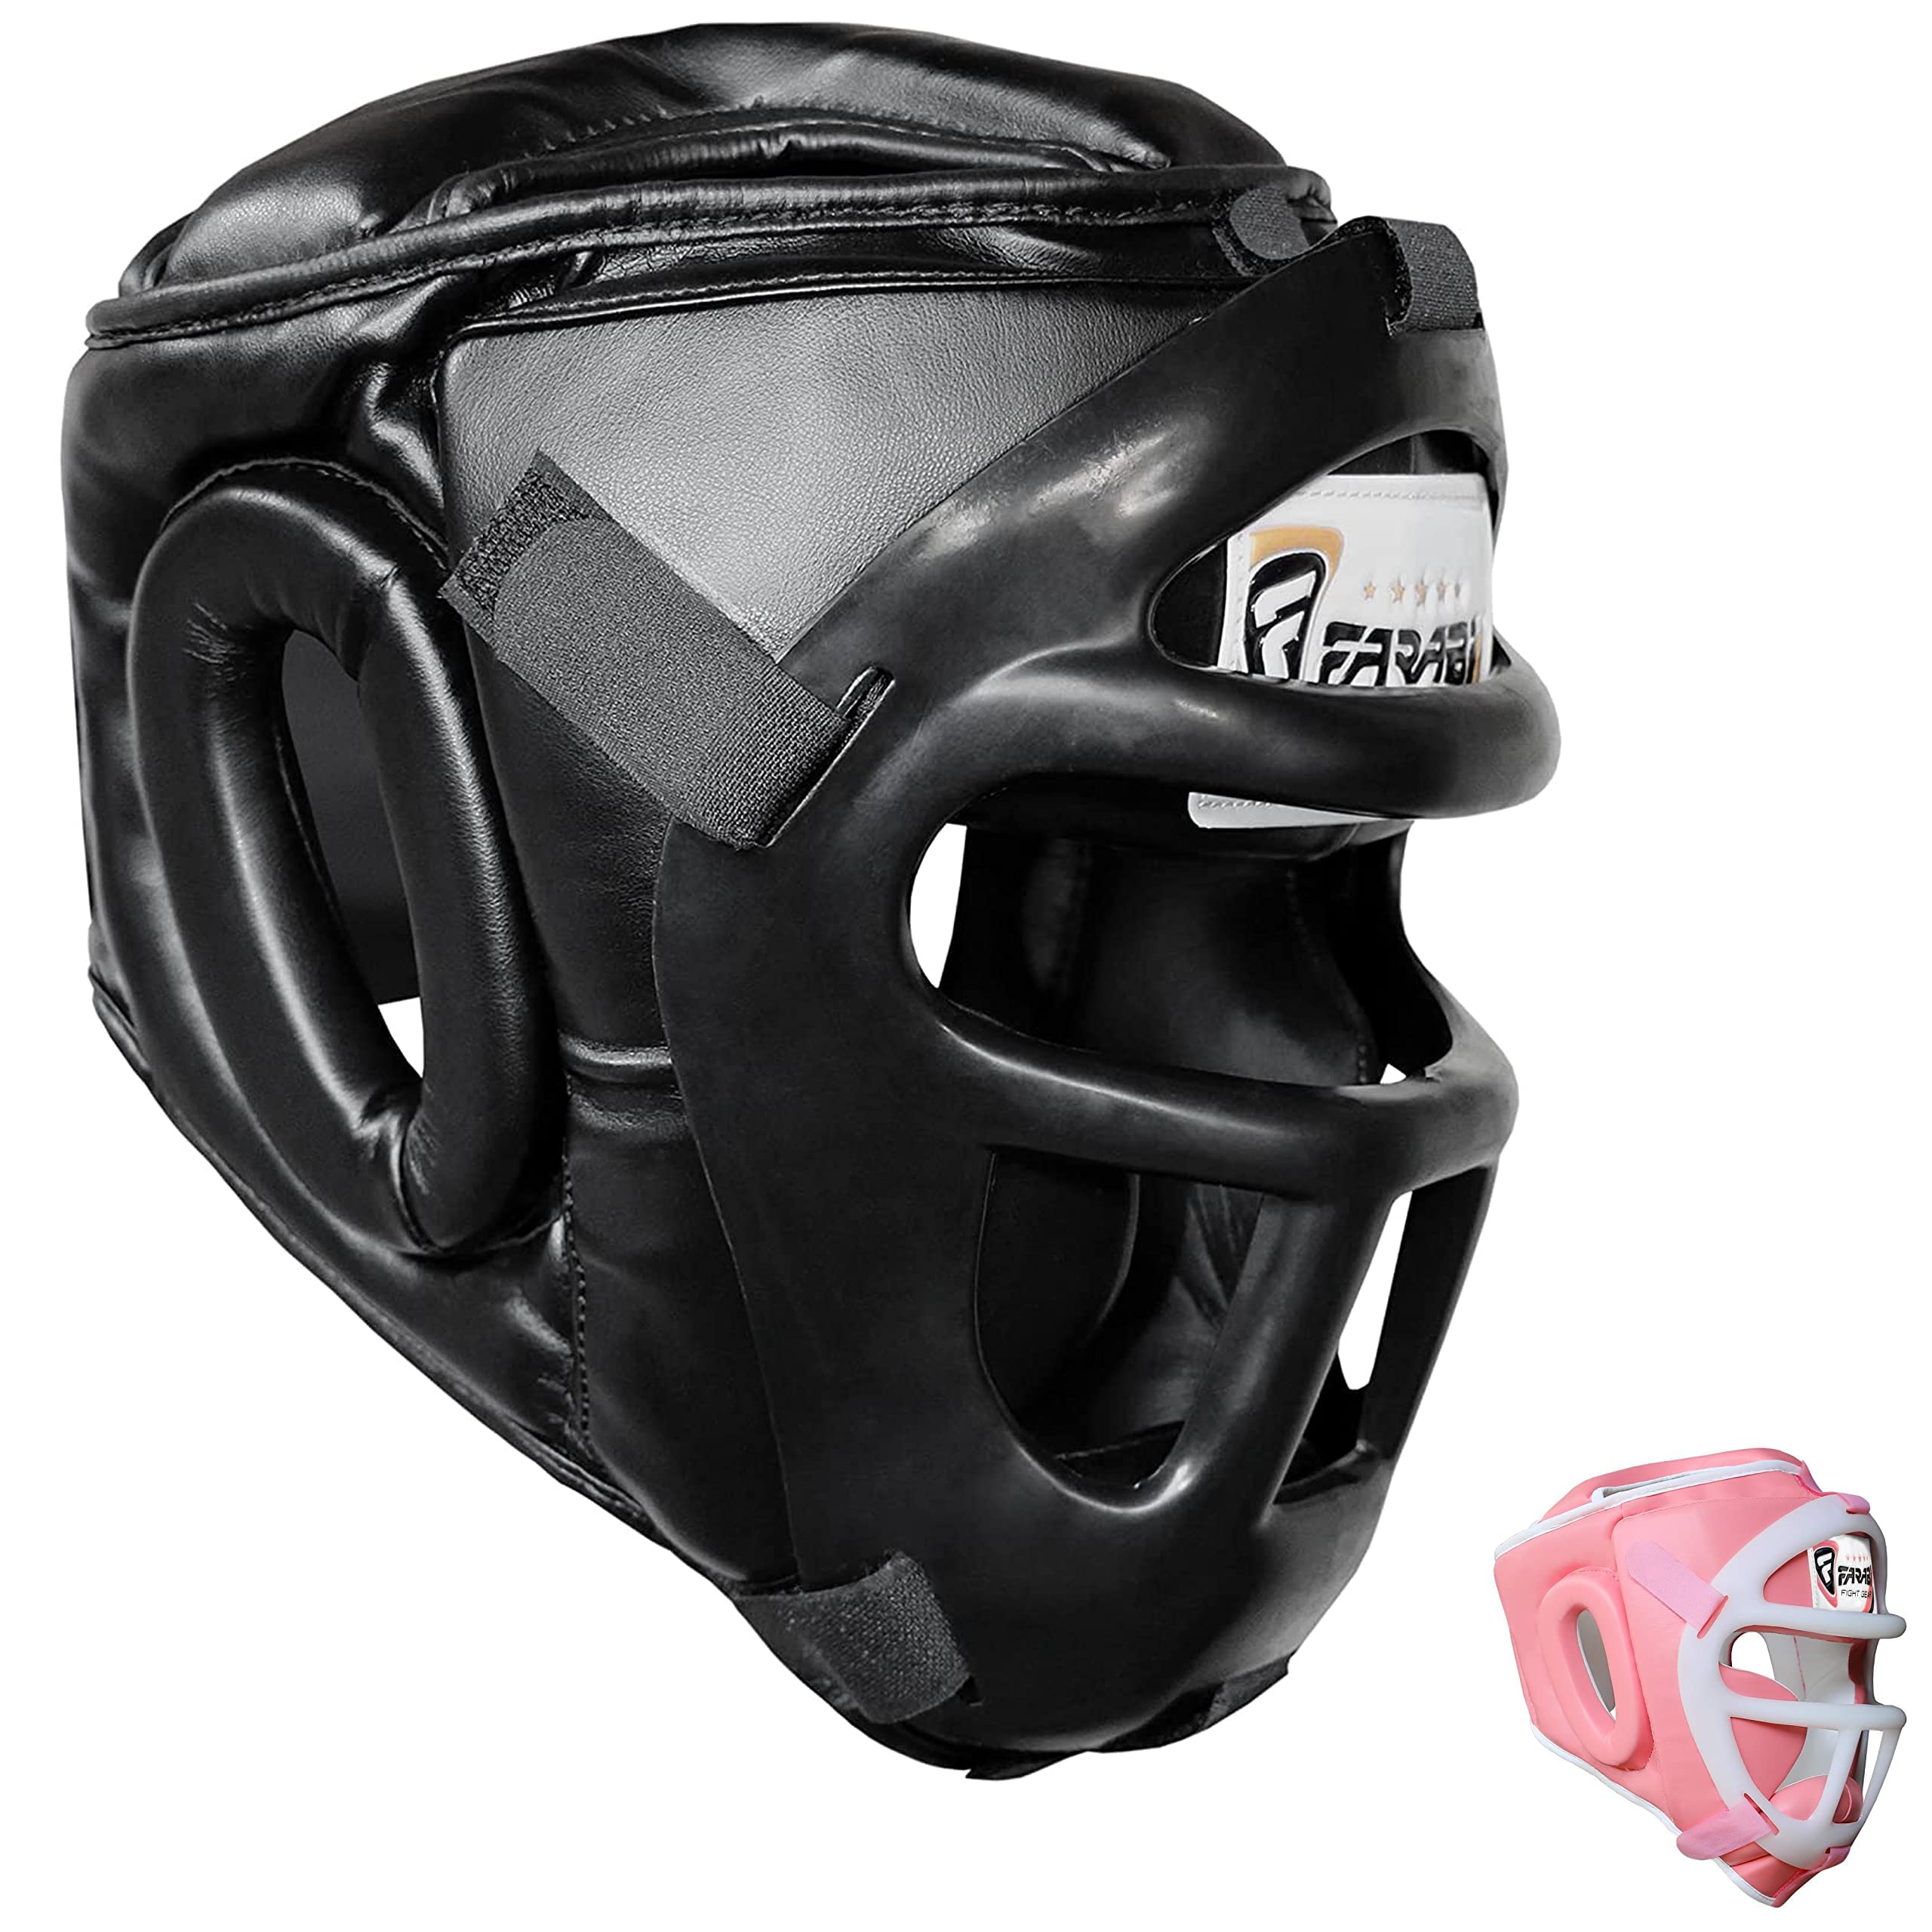 Farabi Sports Boxing HeadGuard, Helmet Head prototector Gear Real Leather (Small) (Black, XL)